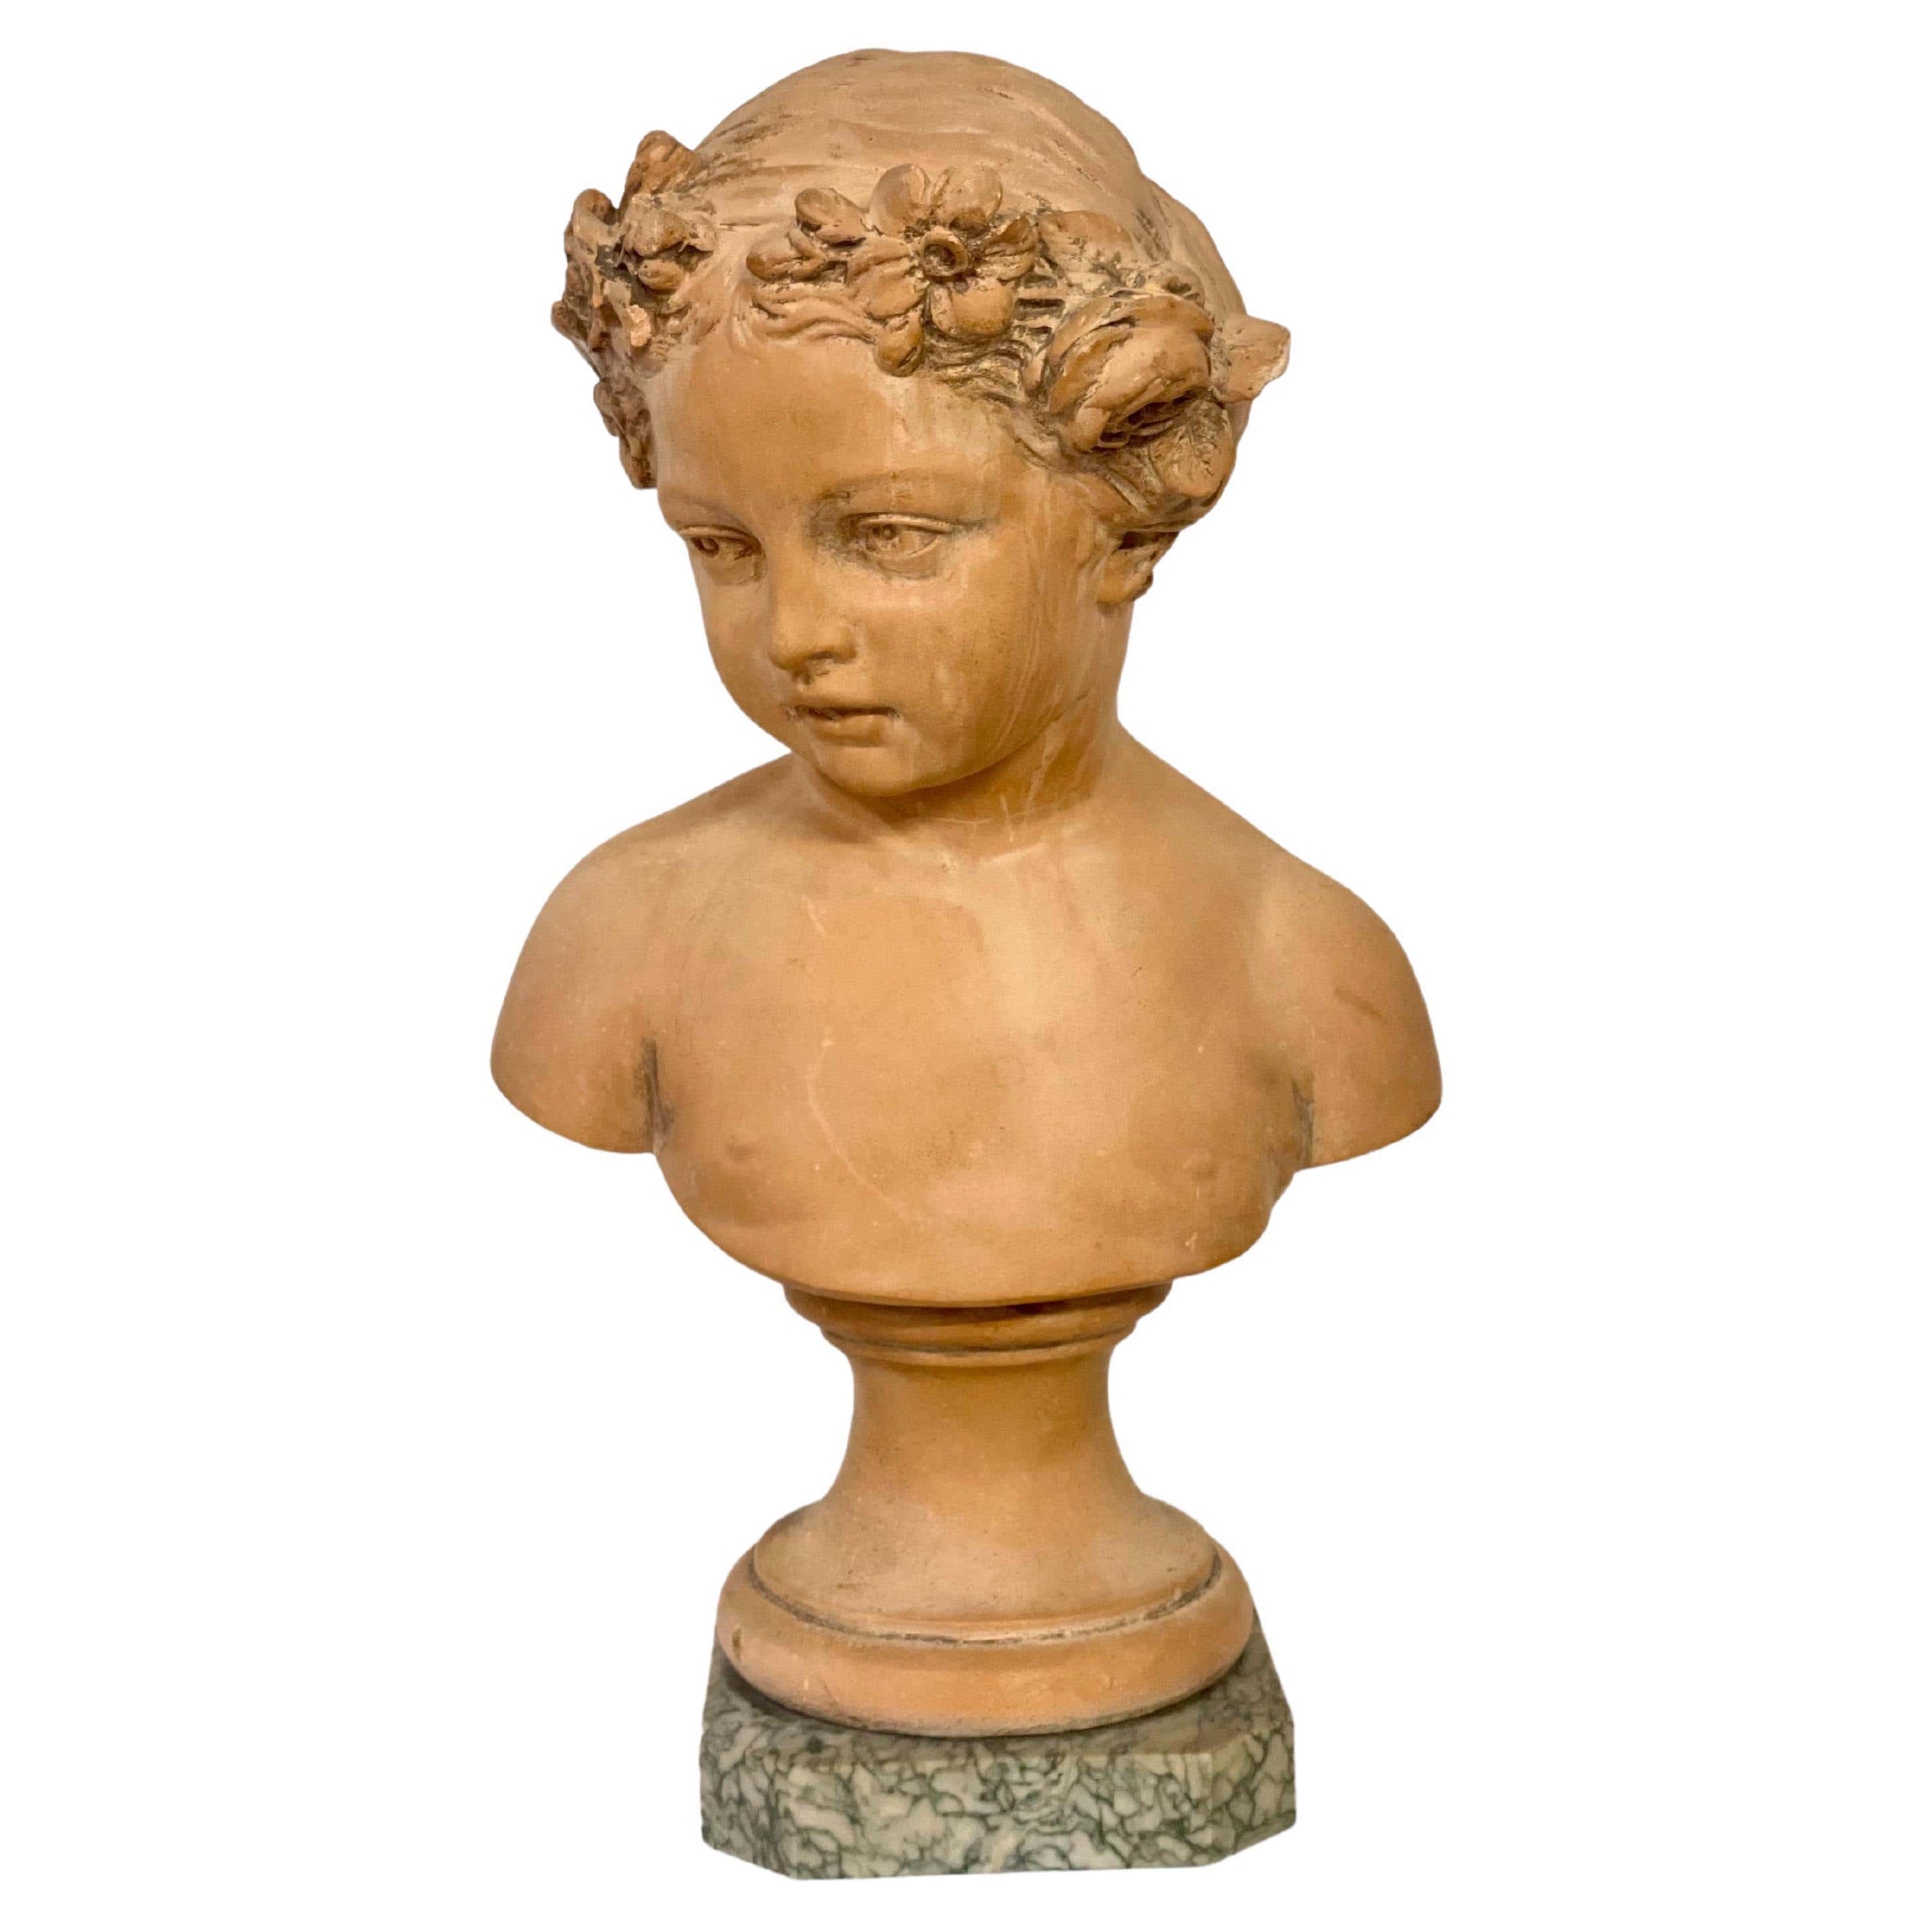 Busto de terracota del siglo XIX de doncella joven de estilo romántico